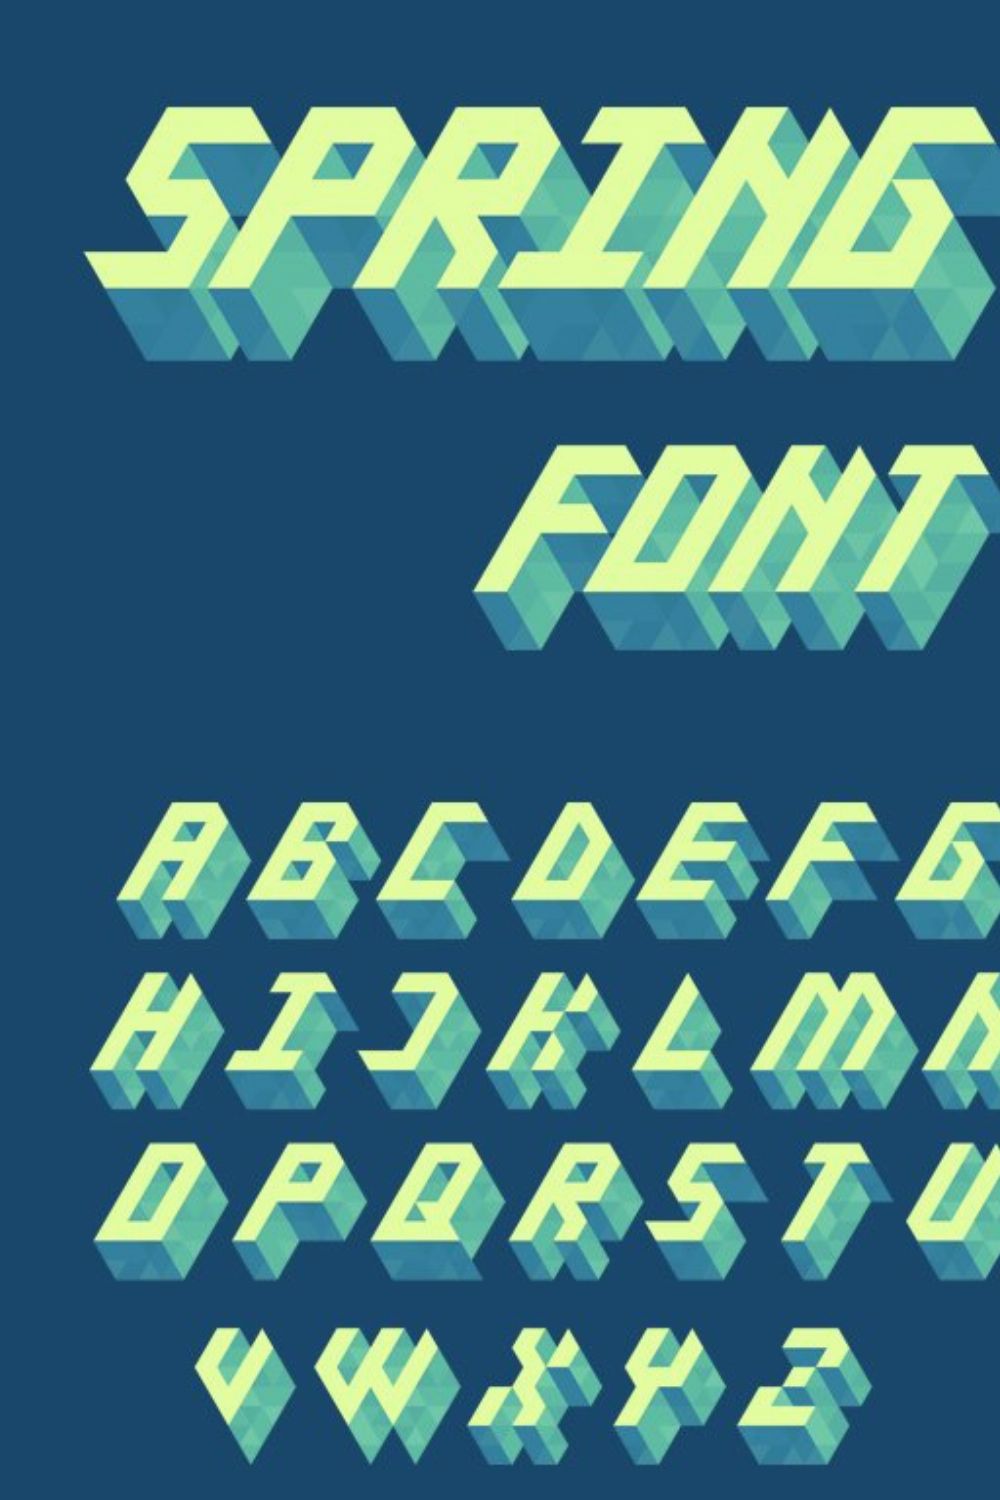 Isometric alphabet: Spring pinterest preview image.